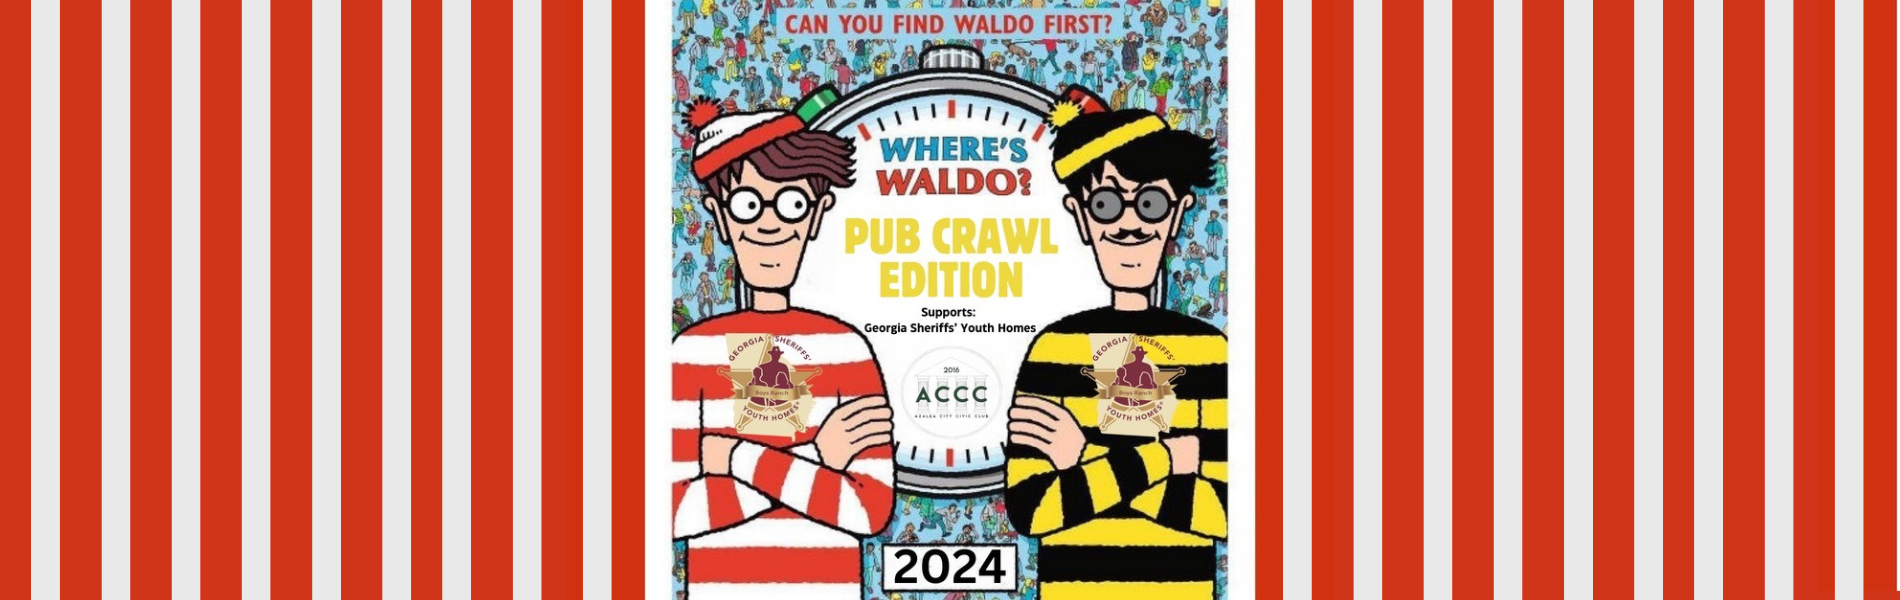 2024 Azalea City Civic Club Pub Crawl - Where's Waldo?